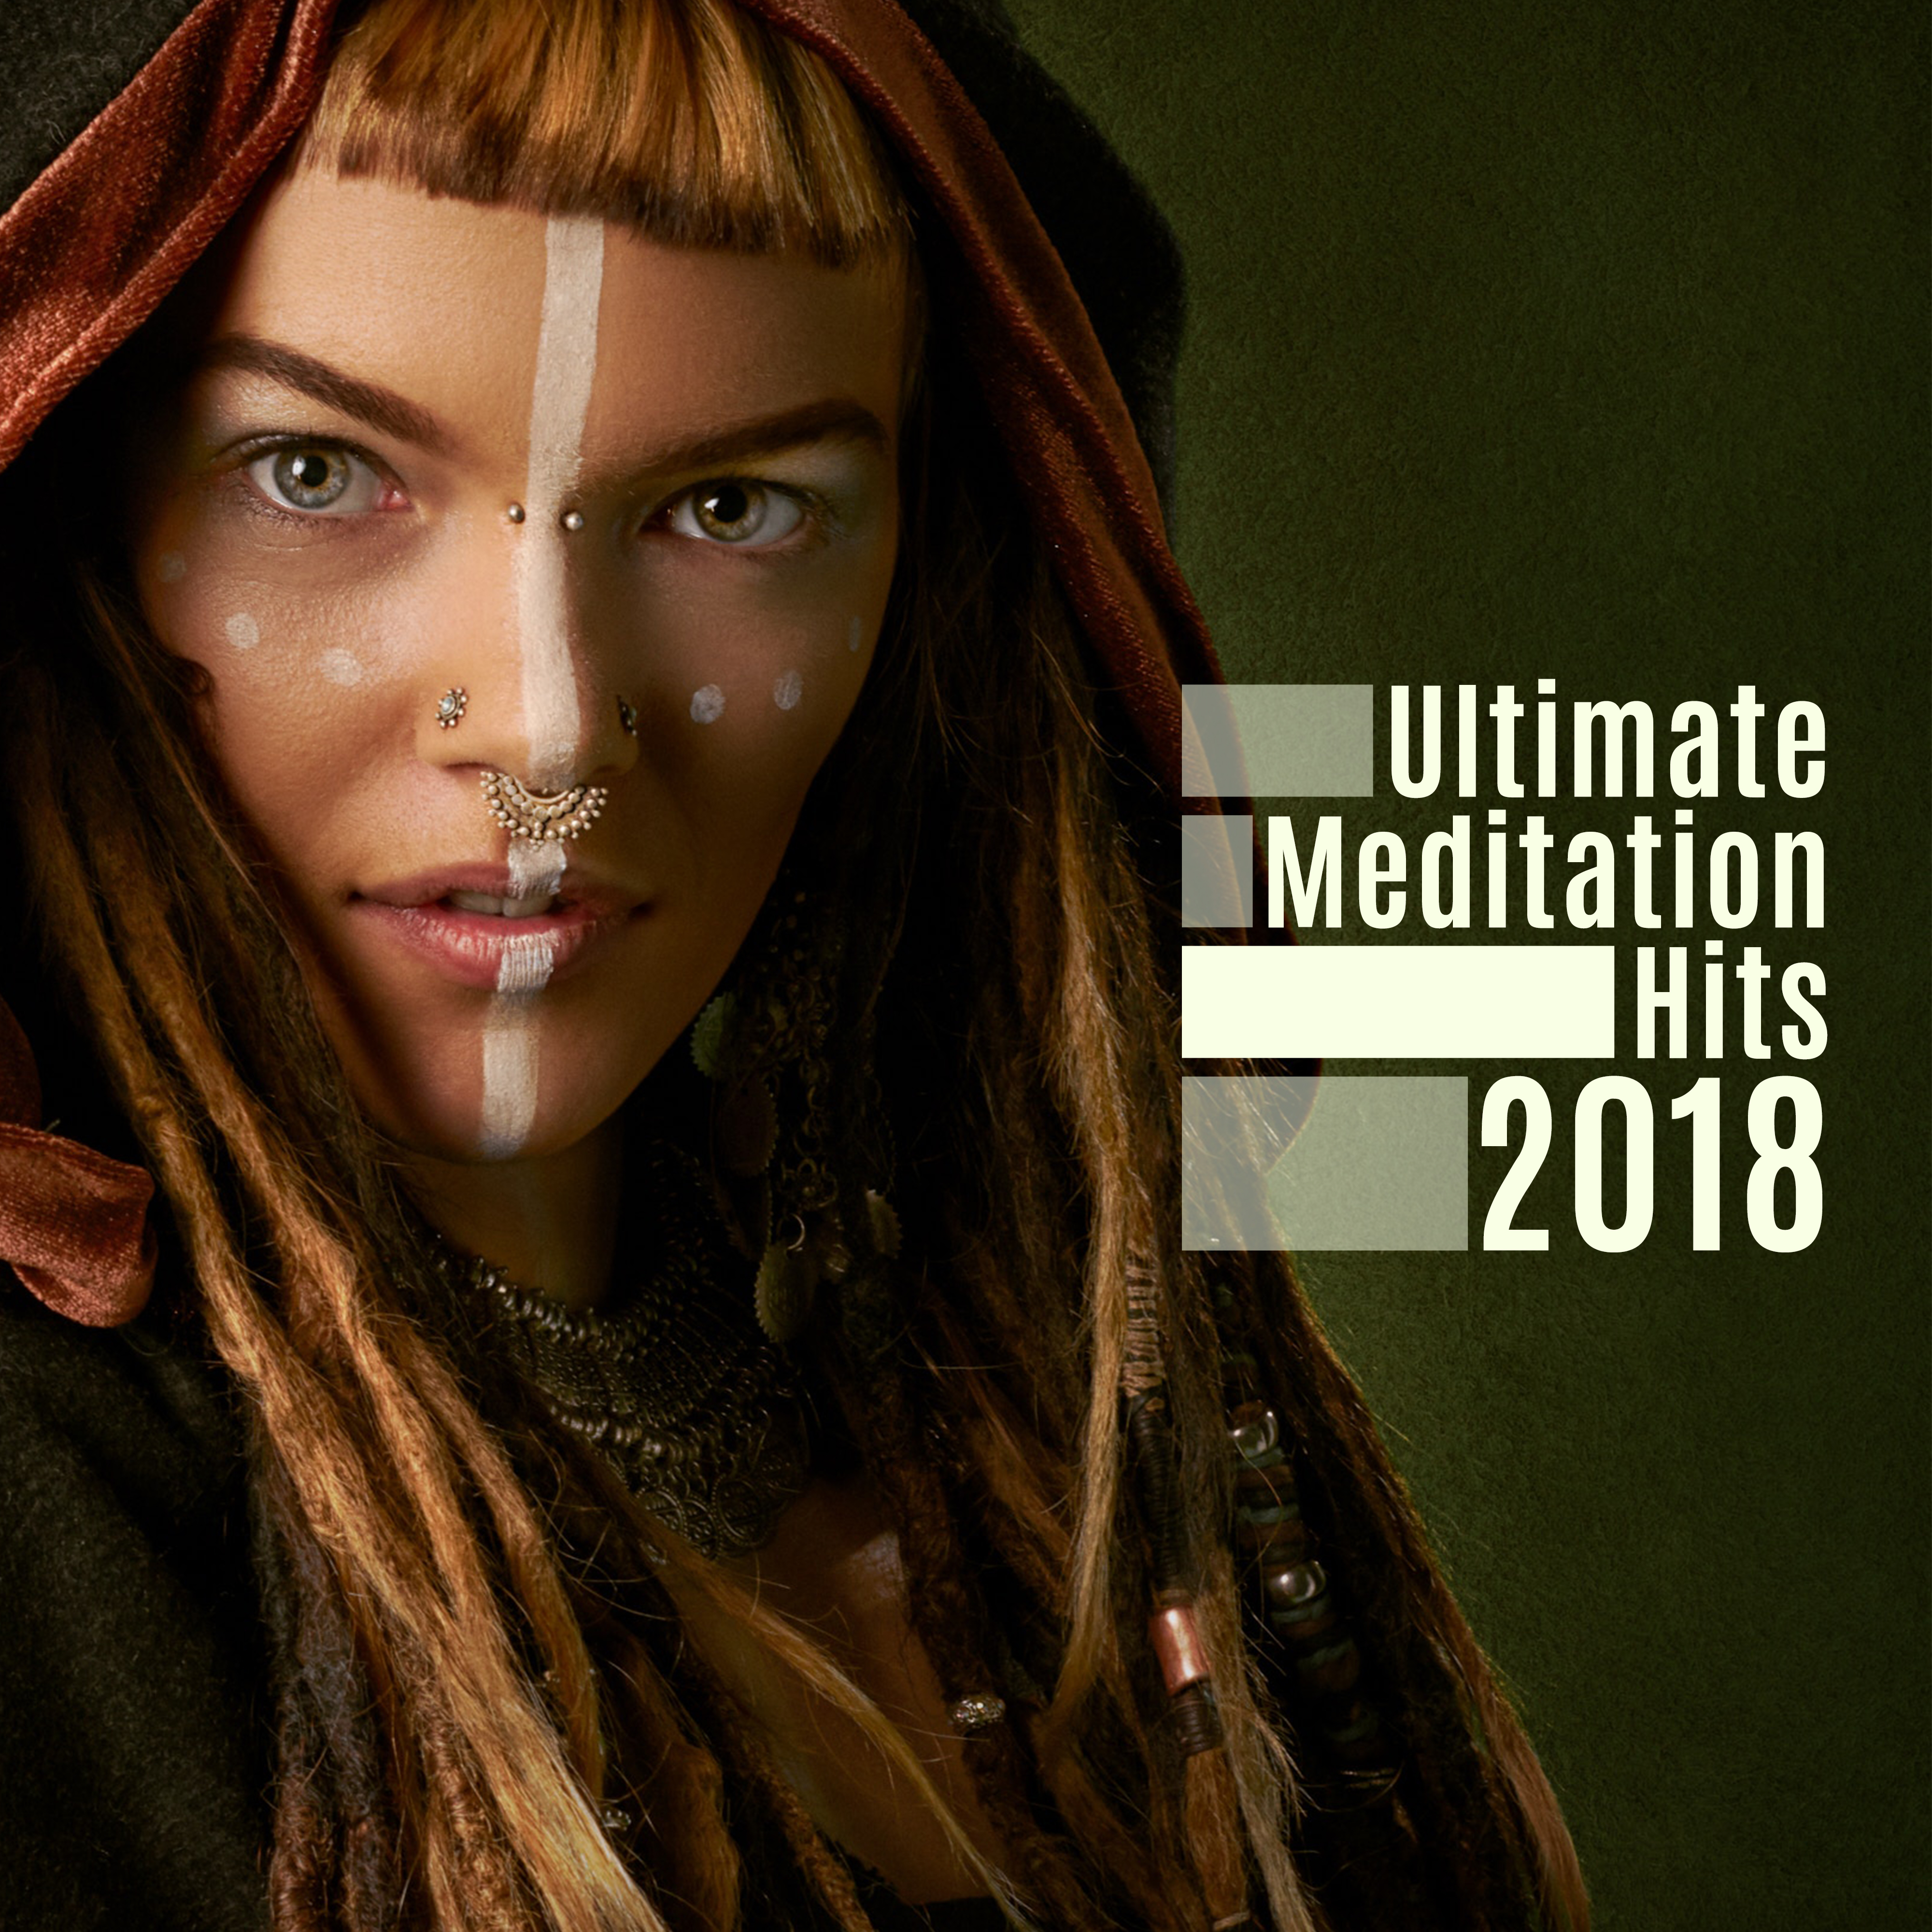 Ultimate Meditation Hits 2018